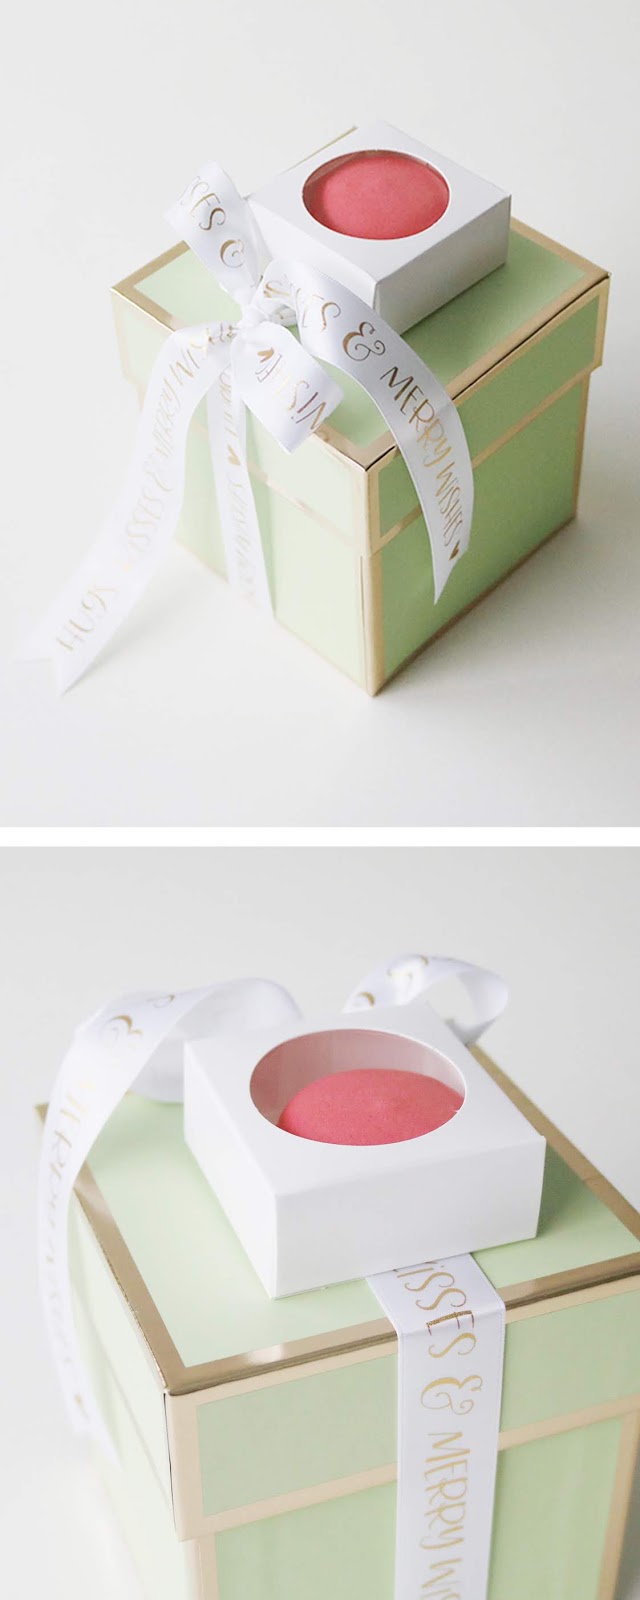 edible gift topper inspiration for holiday gift wrapping | Creative Bag and Bake Sale Toronto